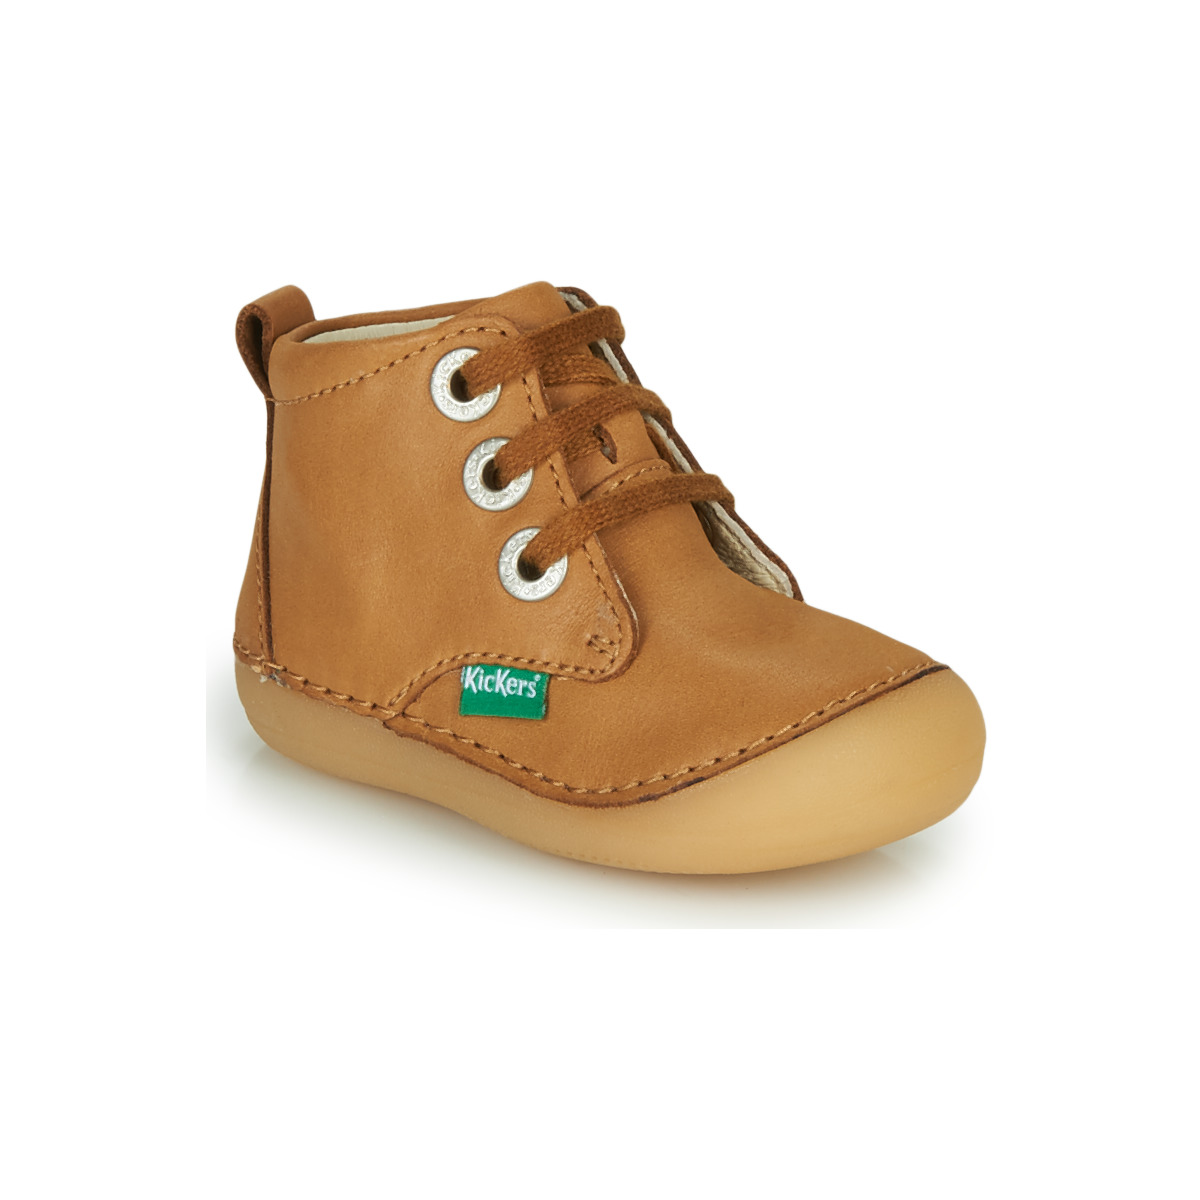 Schuhe Kinder Boots Kickers SONIZA Kamel